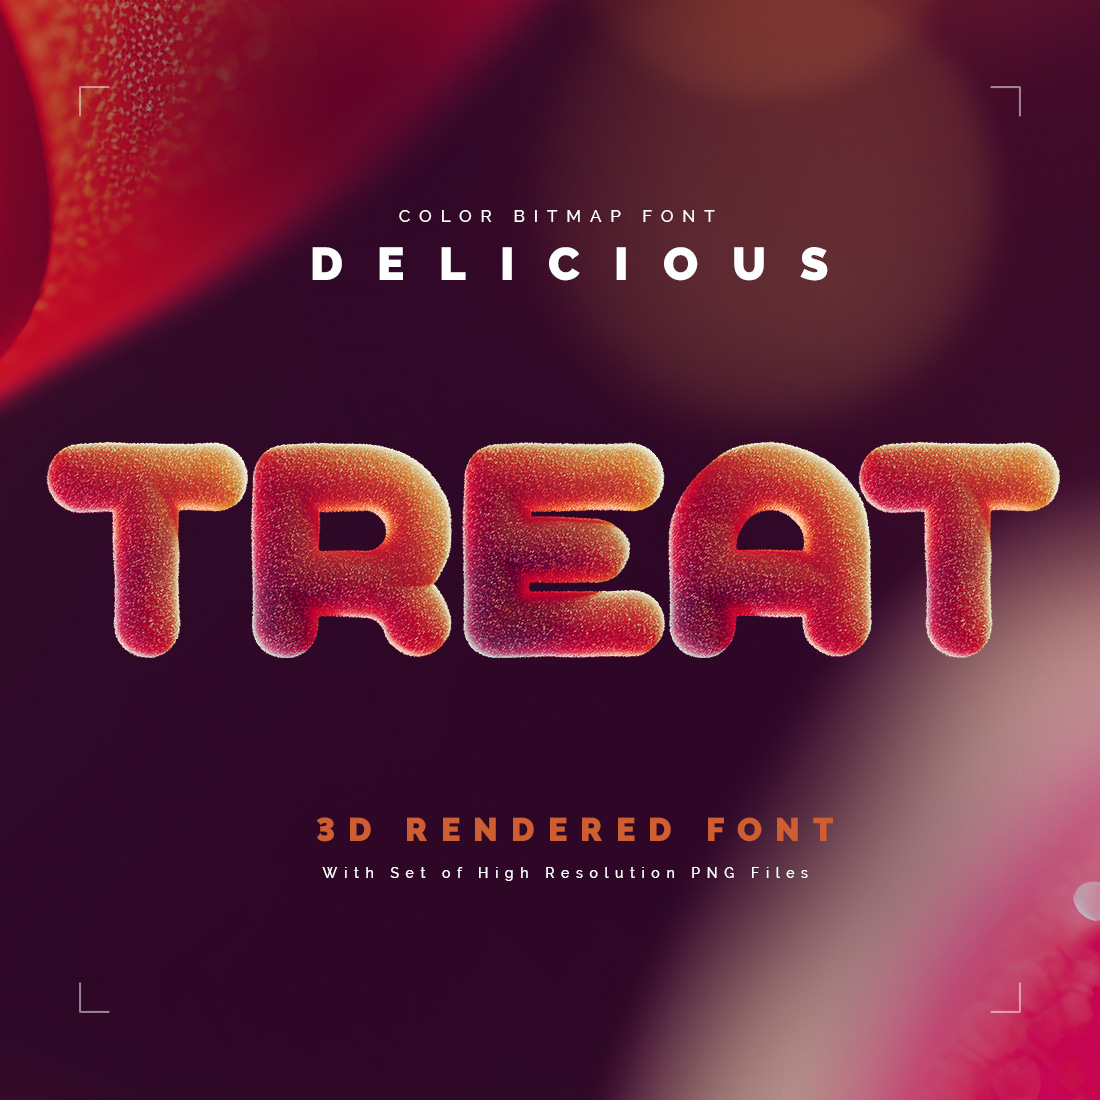 Delicious Treat — Color Bitmap Font cover image.